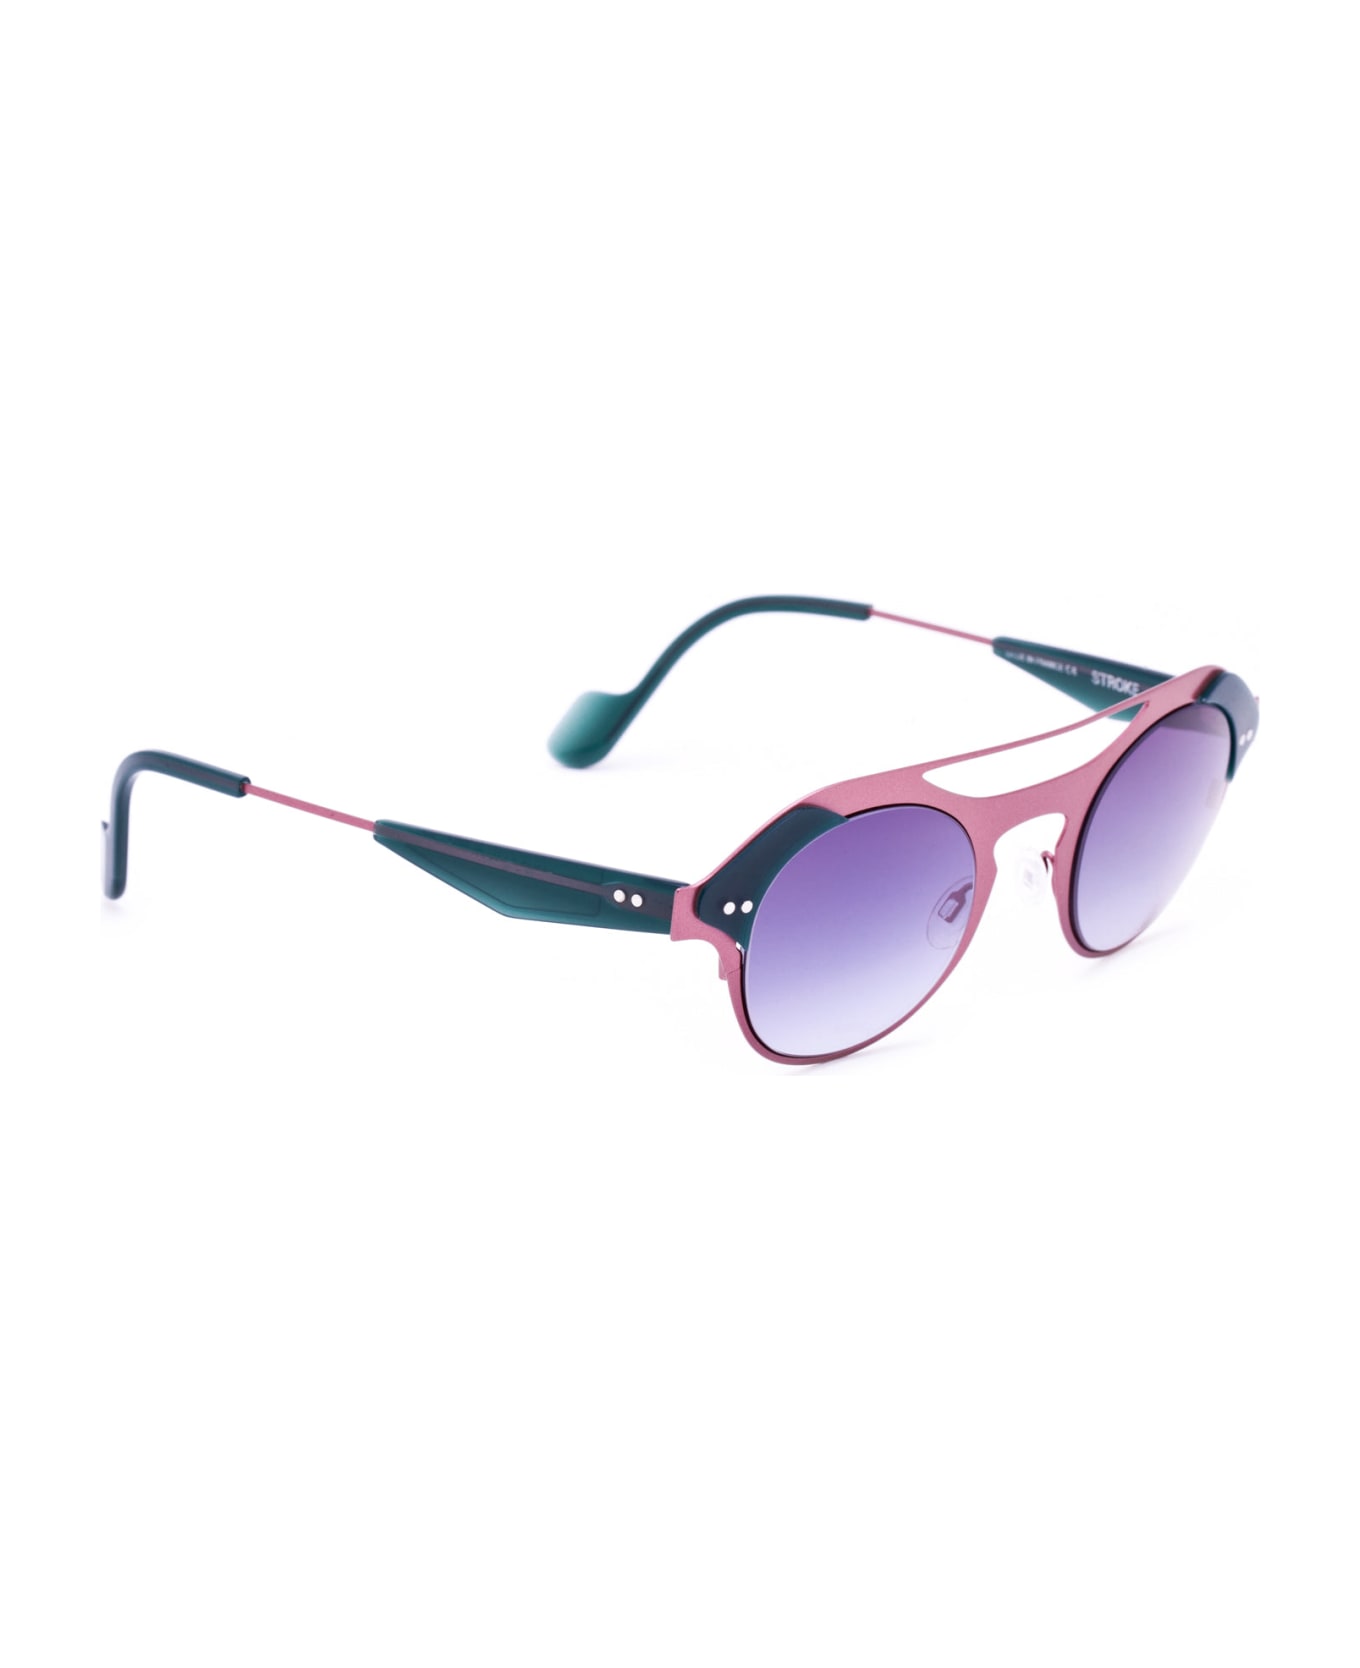 Anne & Valentin Stroke-u233 Sunglasses - pink